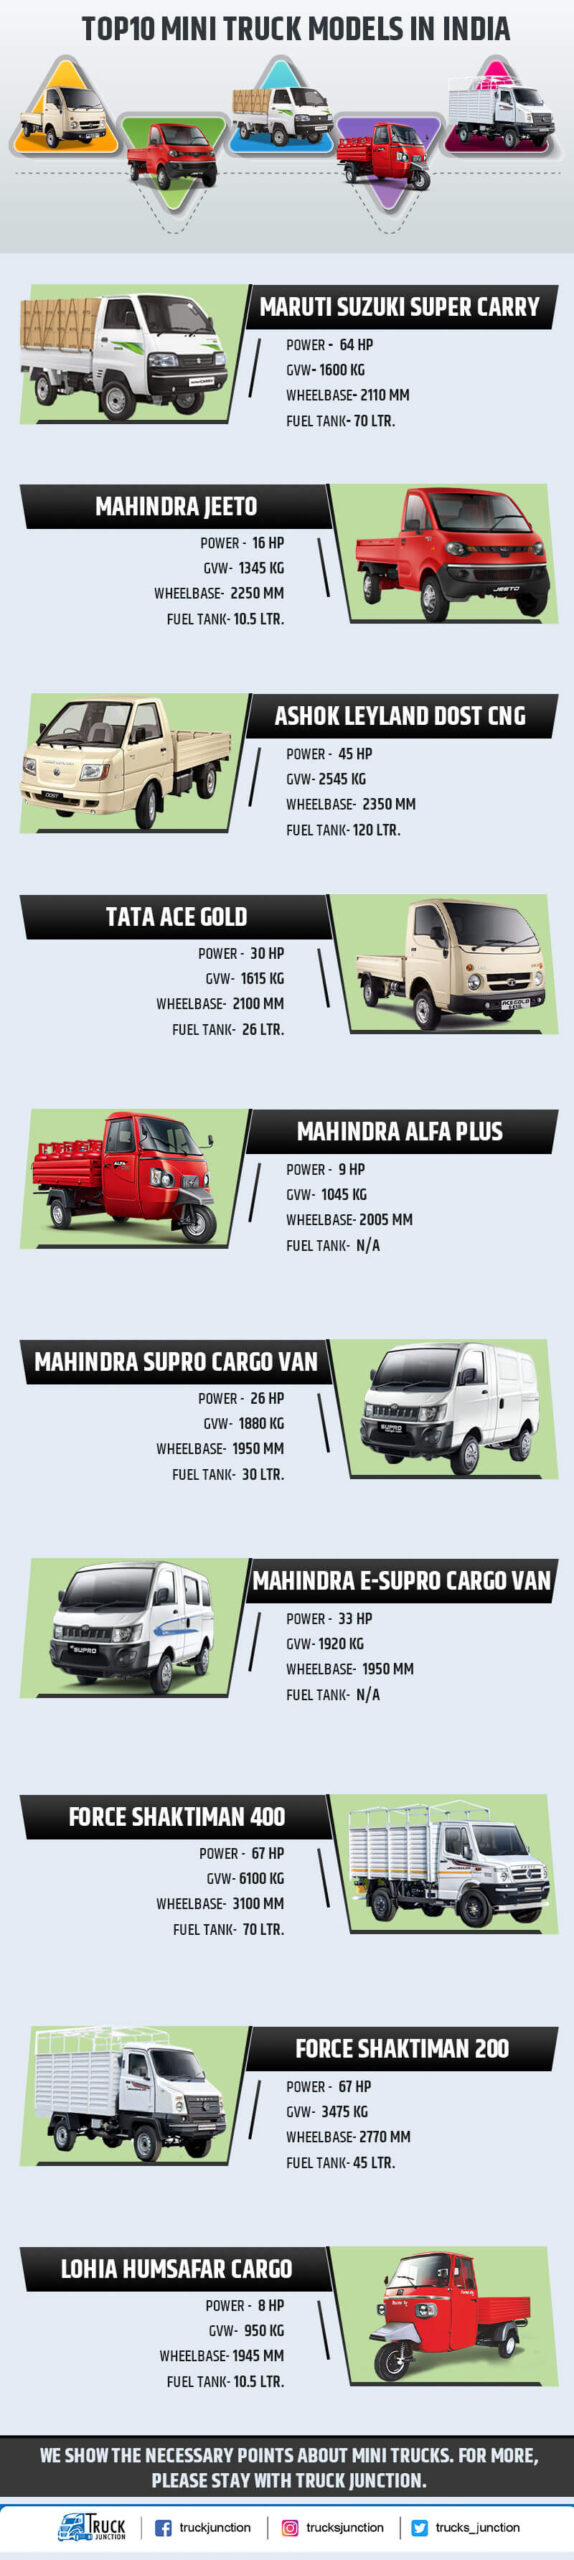 Top 10 mini truck infogiraphic